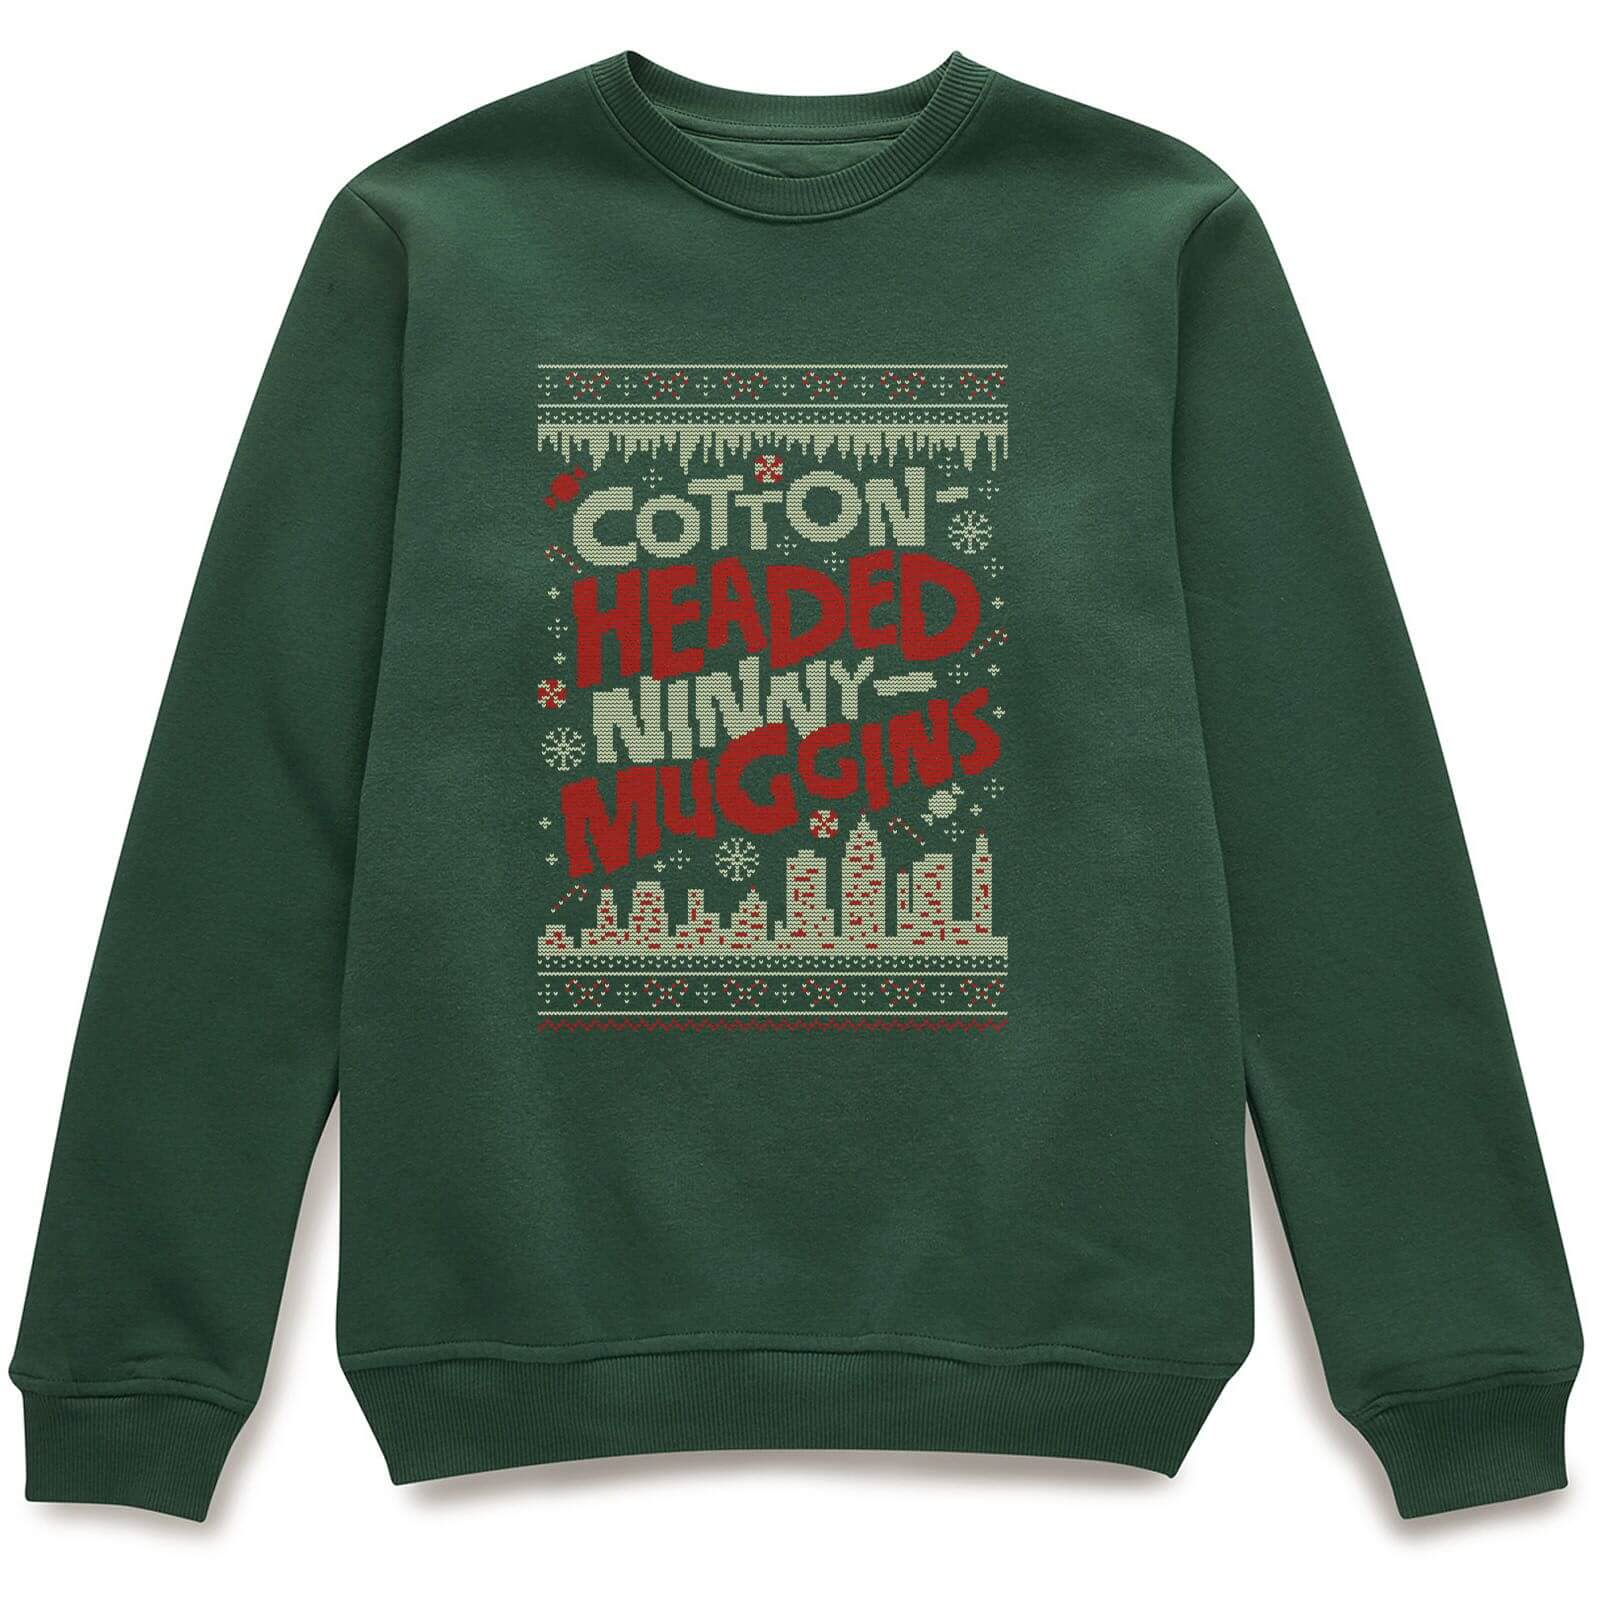 Elf Cotton-Headed-Ninny-Muggins Knit Christmas Sweatshirt - Forest Green - XL